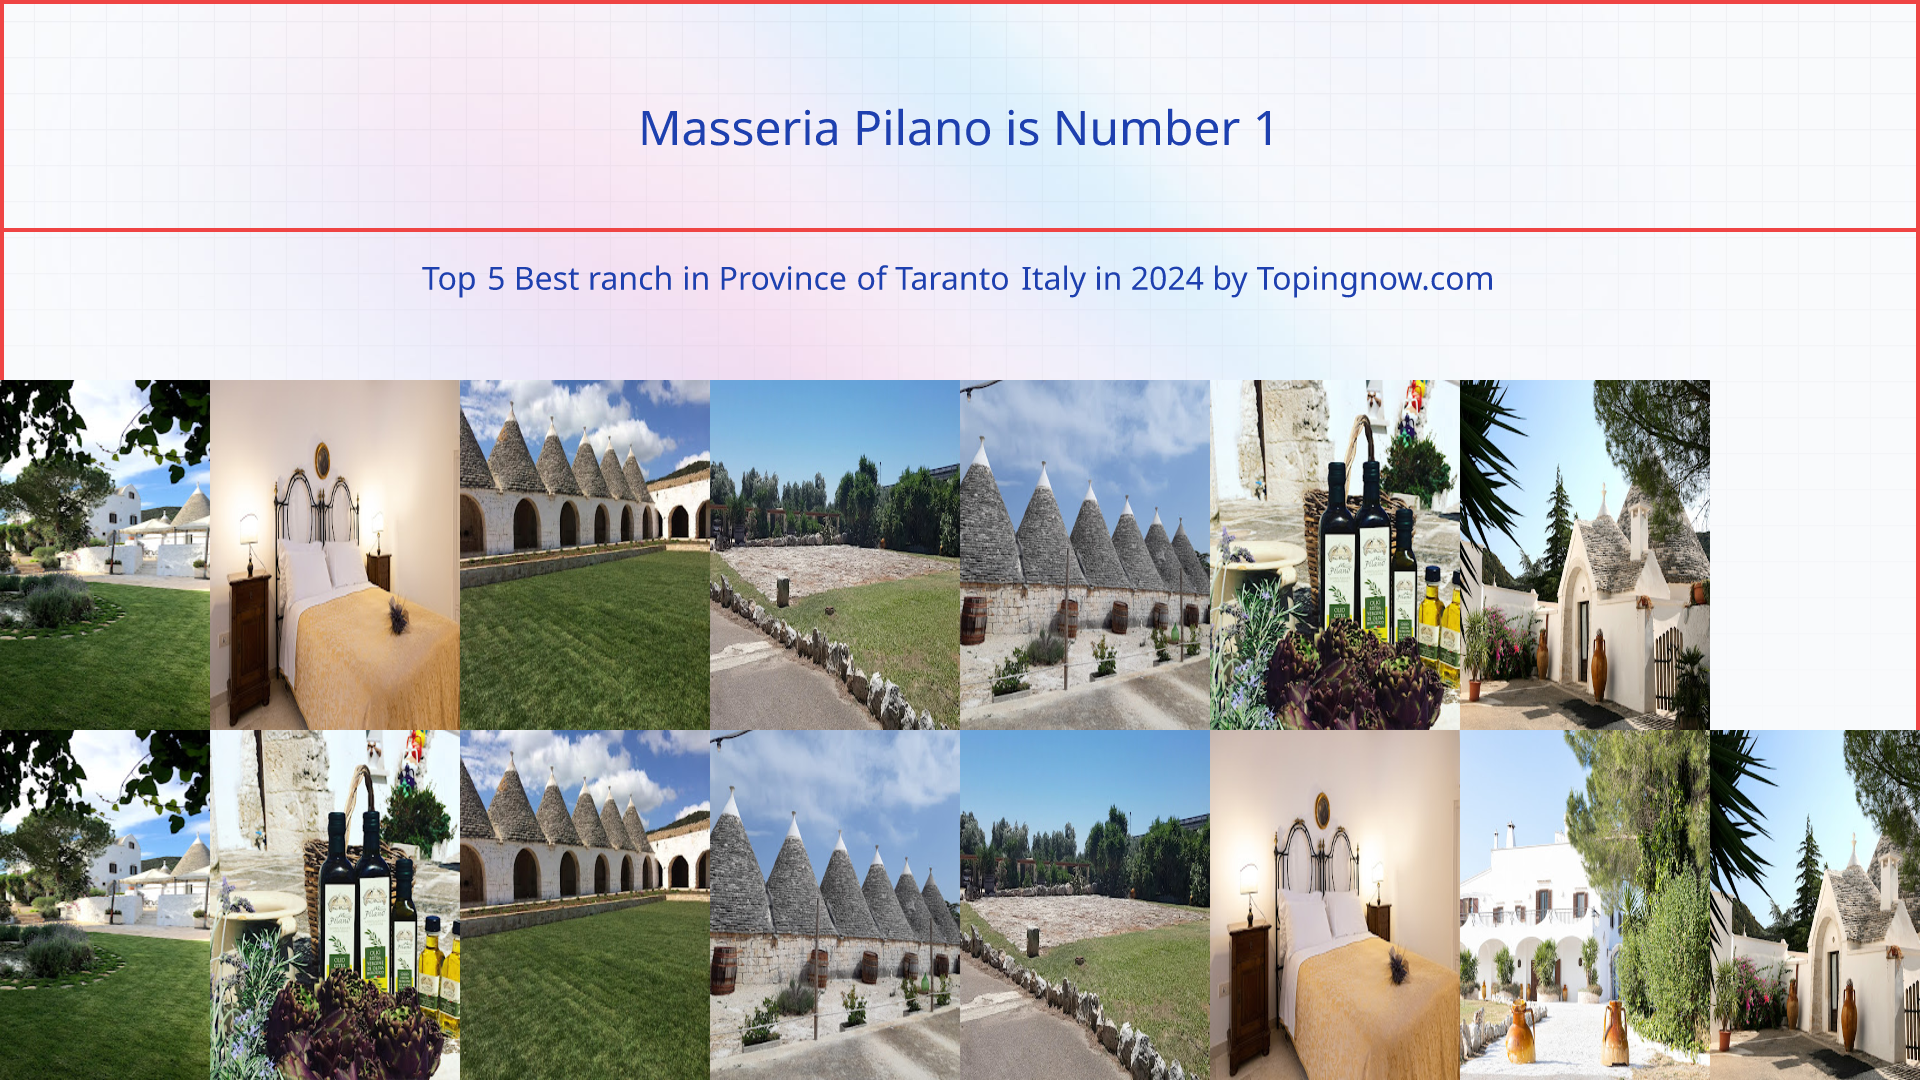 Masseria Pilano: Top 5 Best ranch in Province of Taranto Italy in 2024